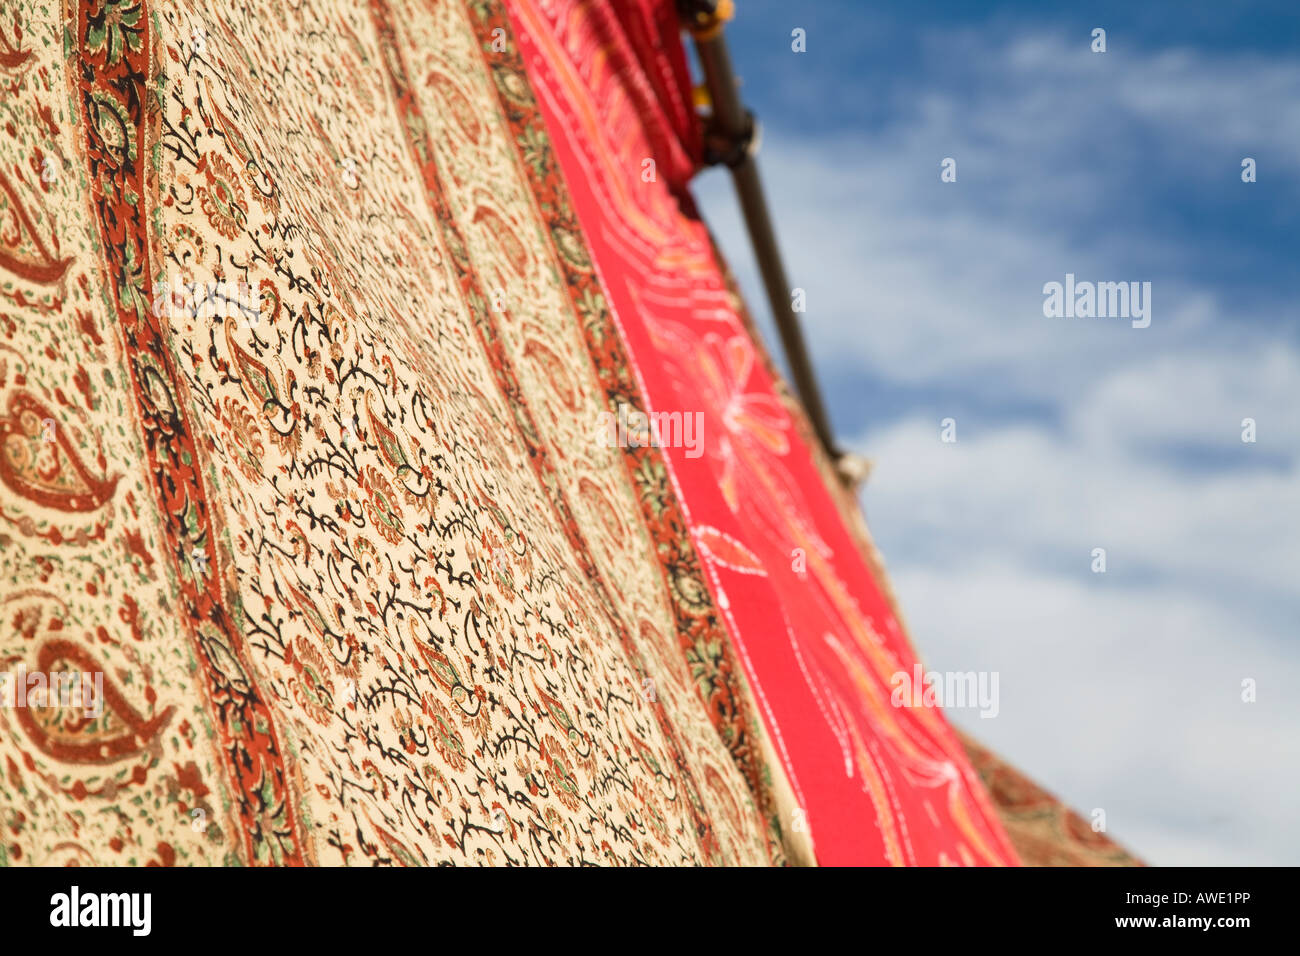 CALIFORNIA Santa Barbara Colorful patterns and designs on Indian fabrics displayed outdoors Stock Photo